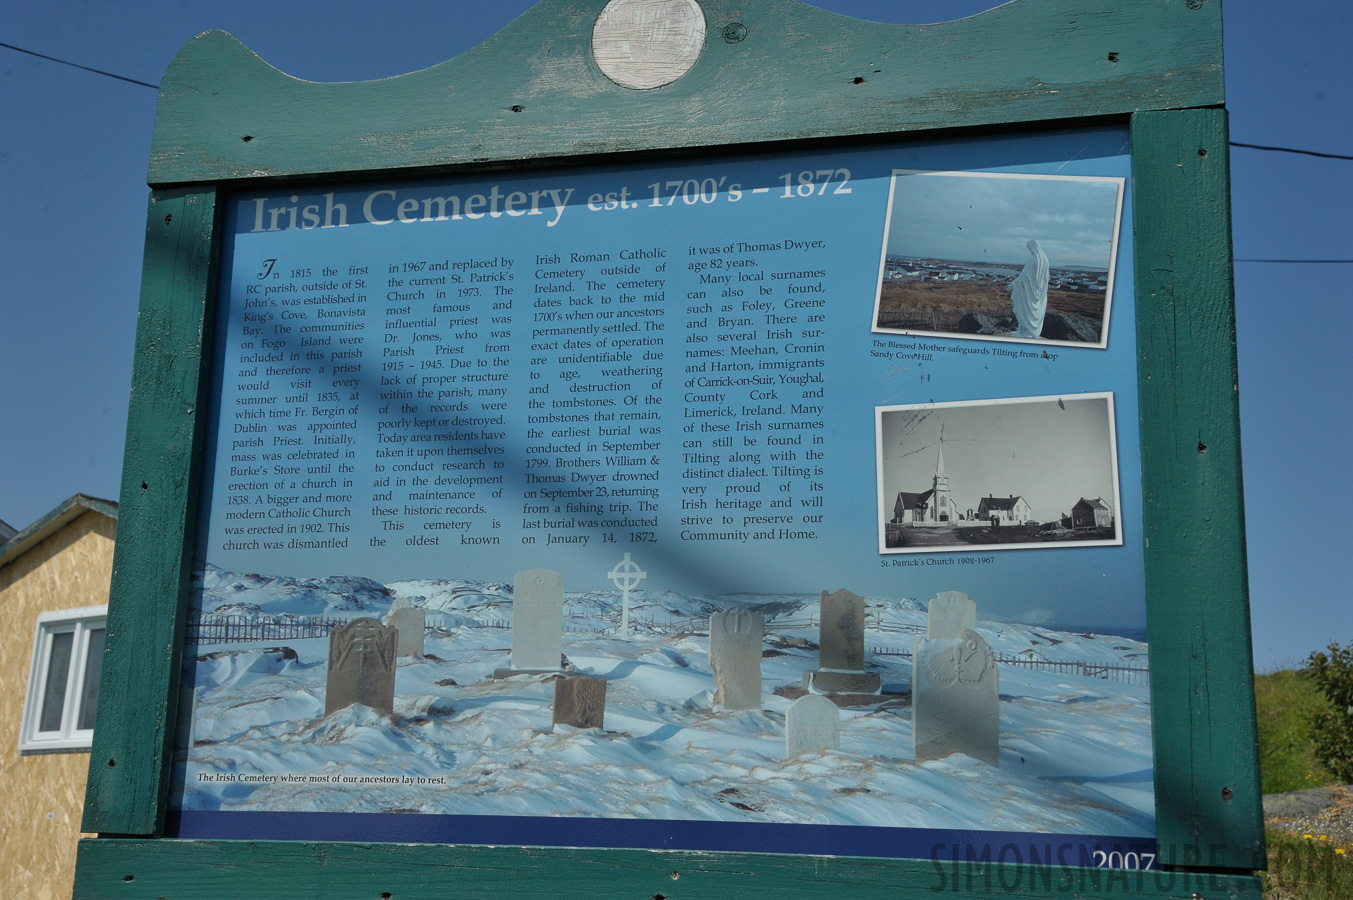 Irish Cementery [45 mm, 1/1250 sec at f / 11, ISO 400]